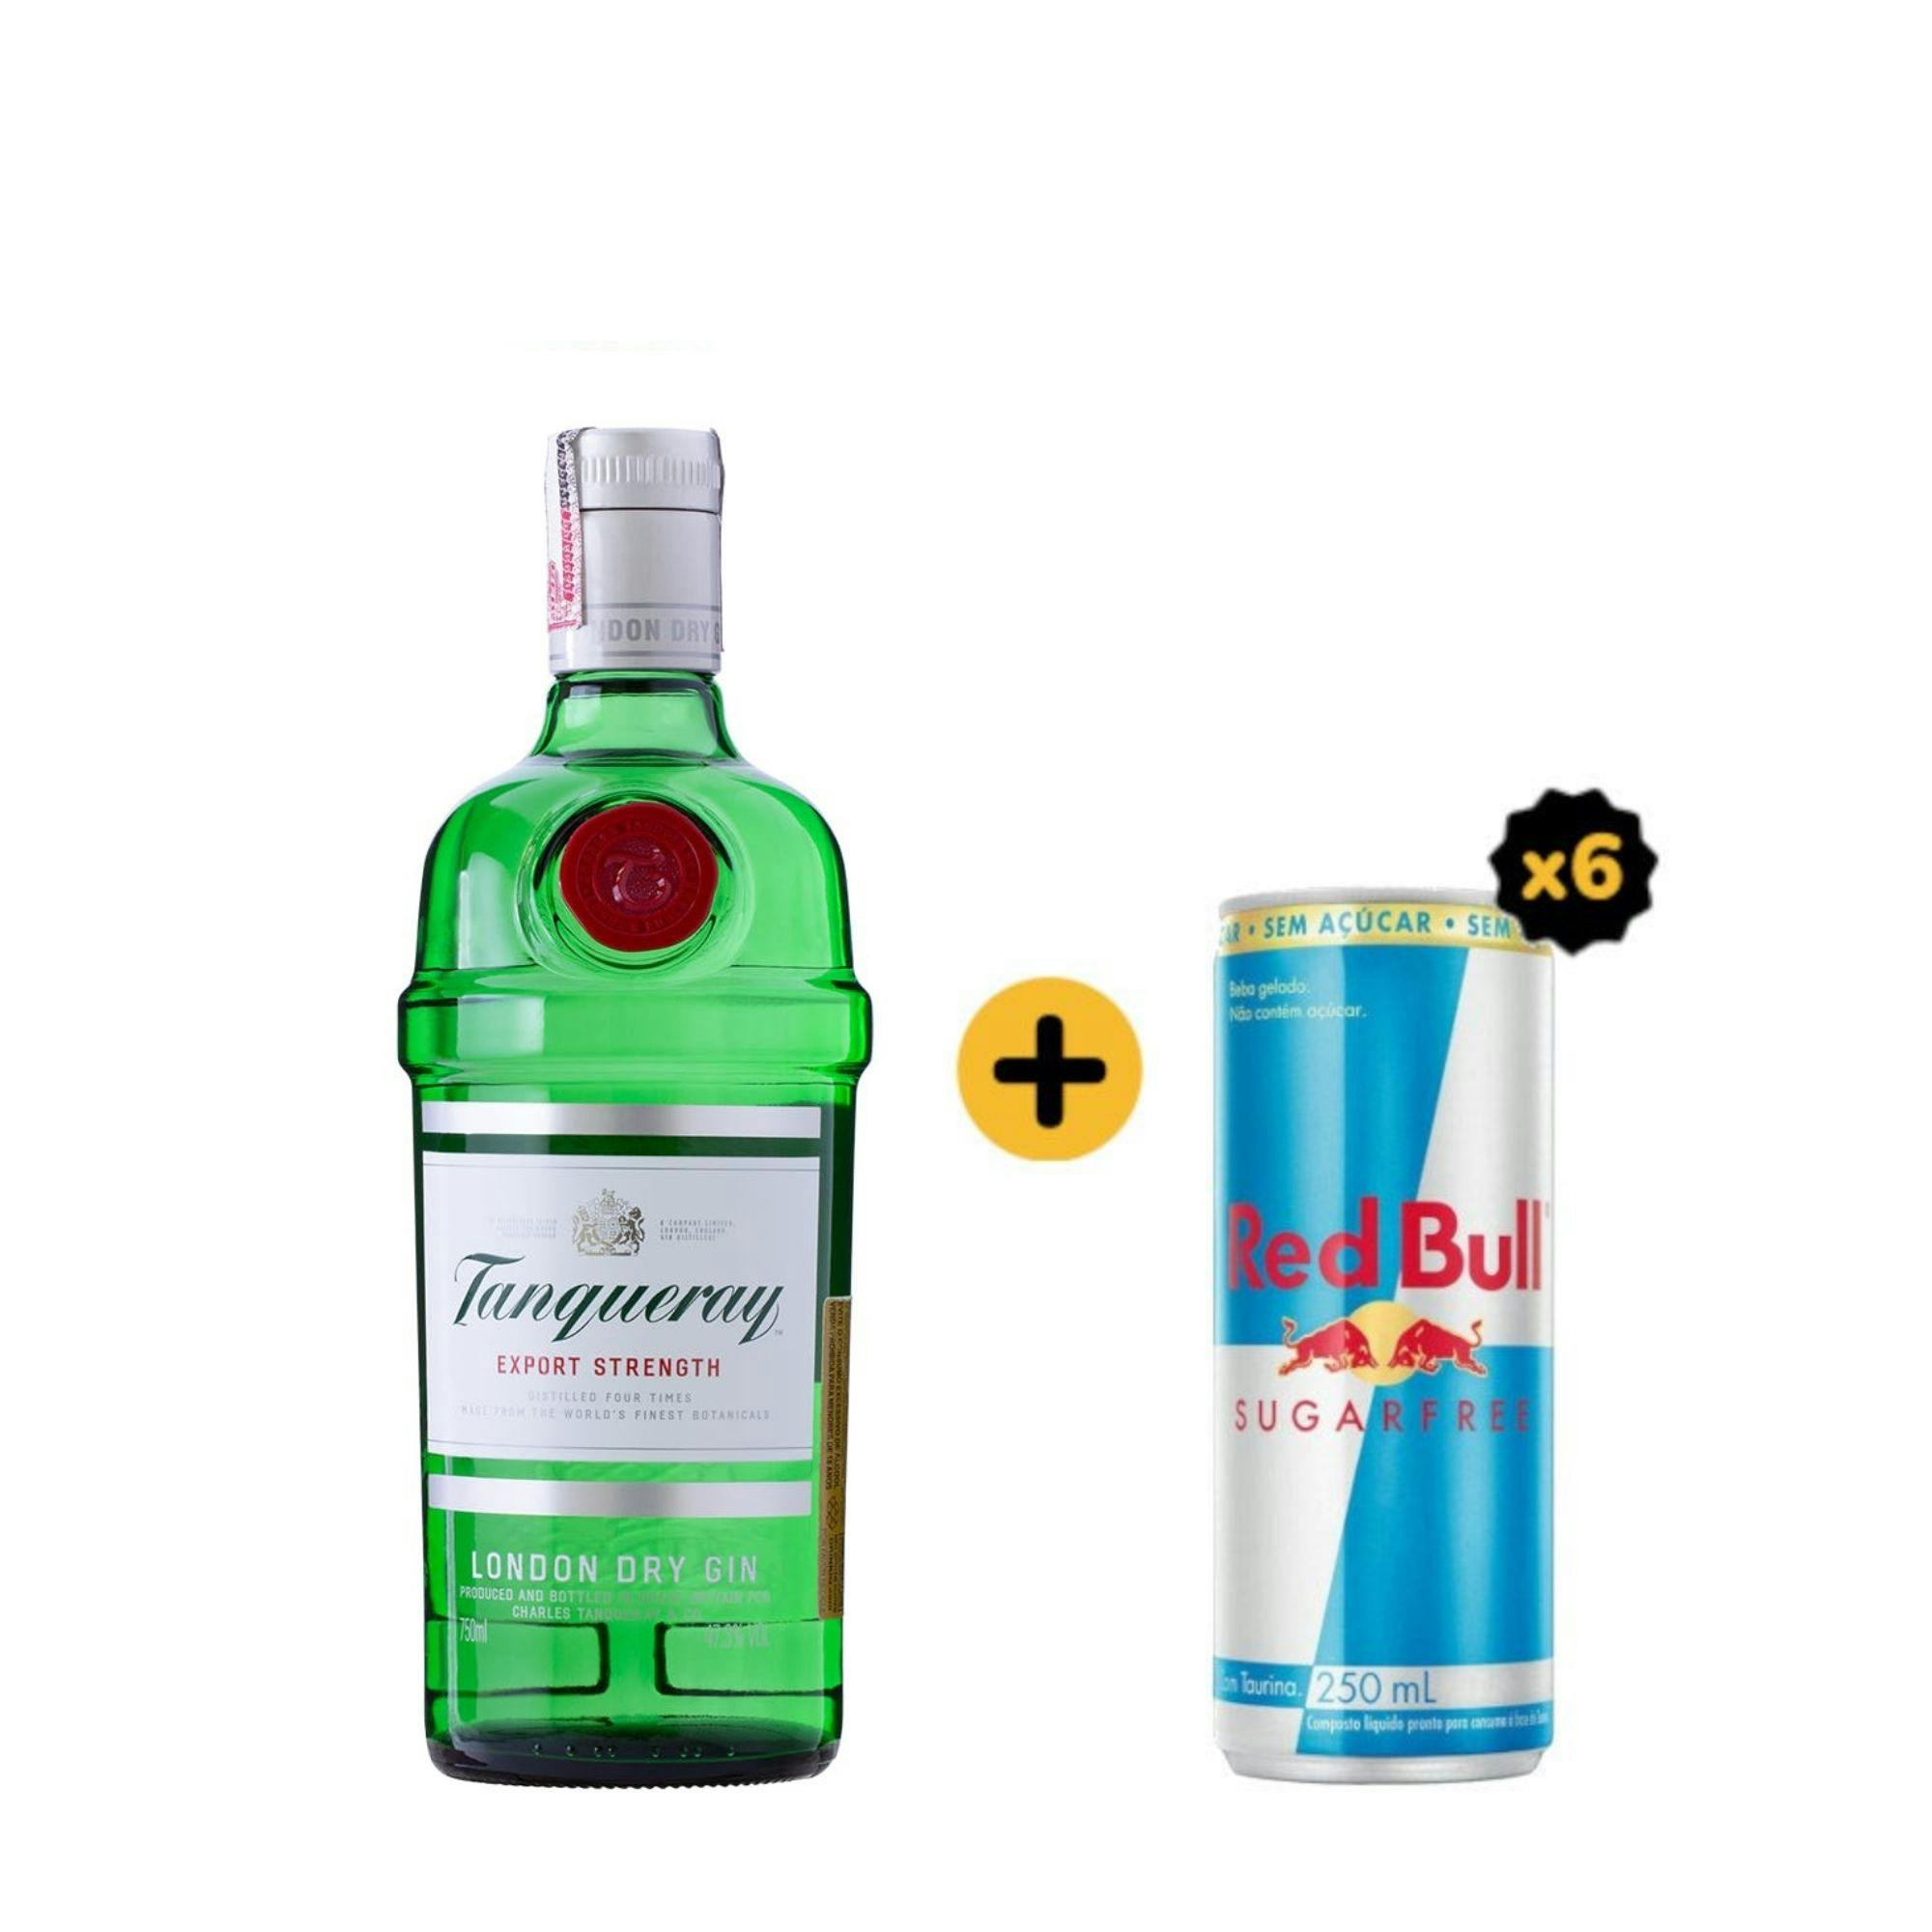 Combo Tanqueray + Red Bull (1 Gin Tanqueray 750ml + 6 Red Bull Sugarfree 250ml)